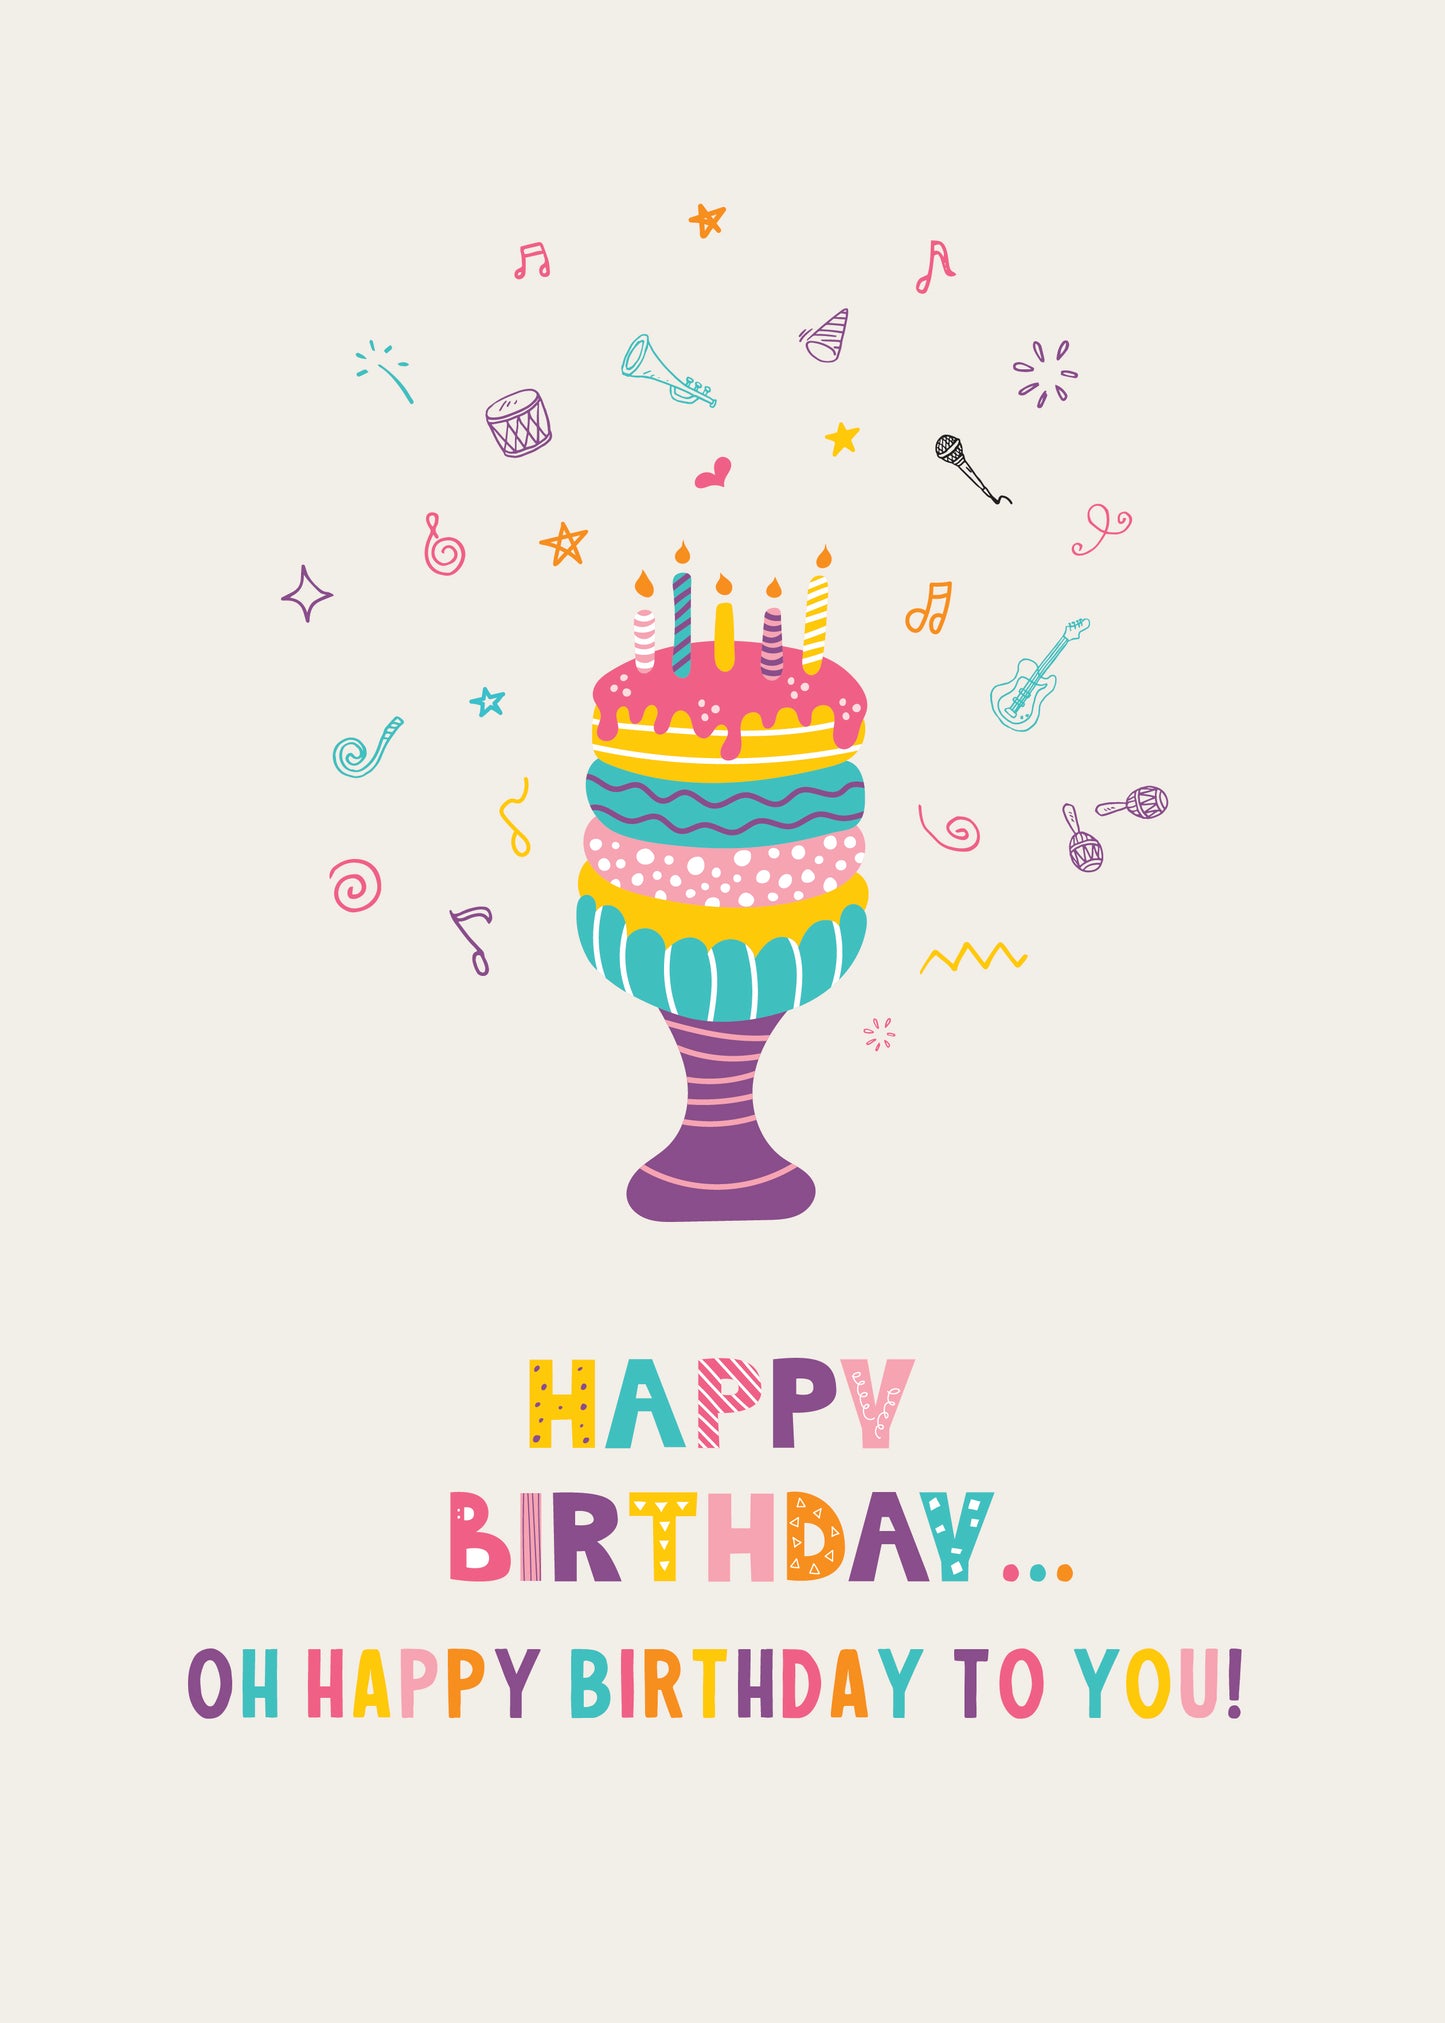 A Musical Happy Birthday - Happy Birthday Card